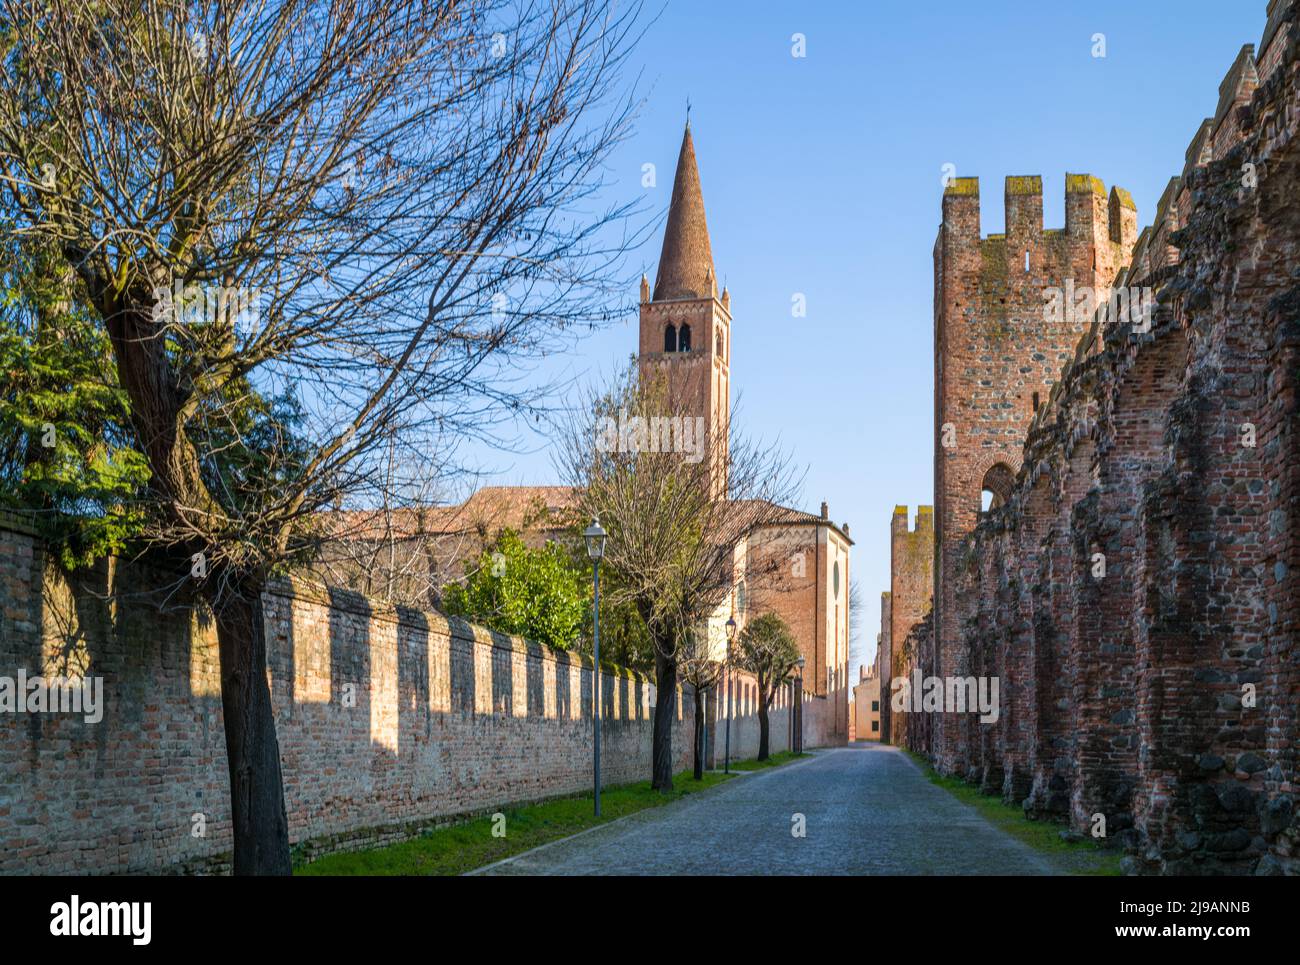 Italia, Montagnana, vista de la iglesia de San Francesco situado frente a las murallas medievales Foto de stock